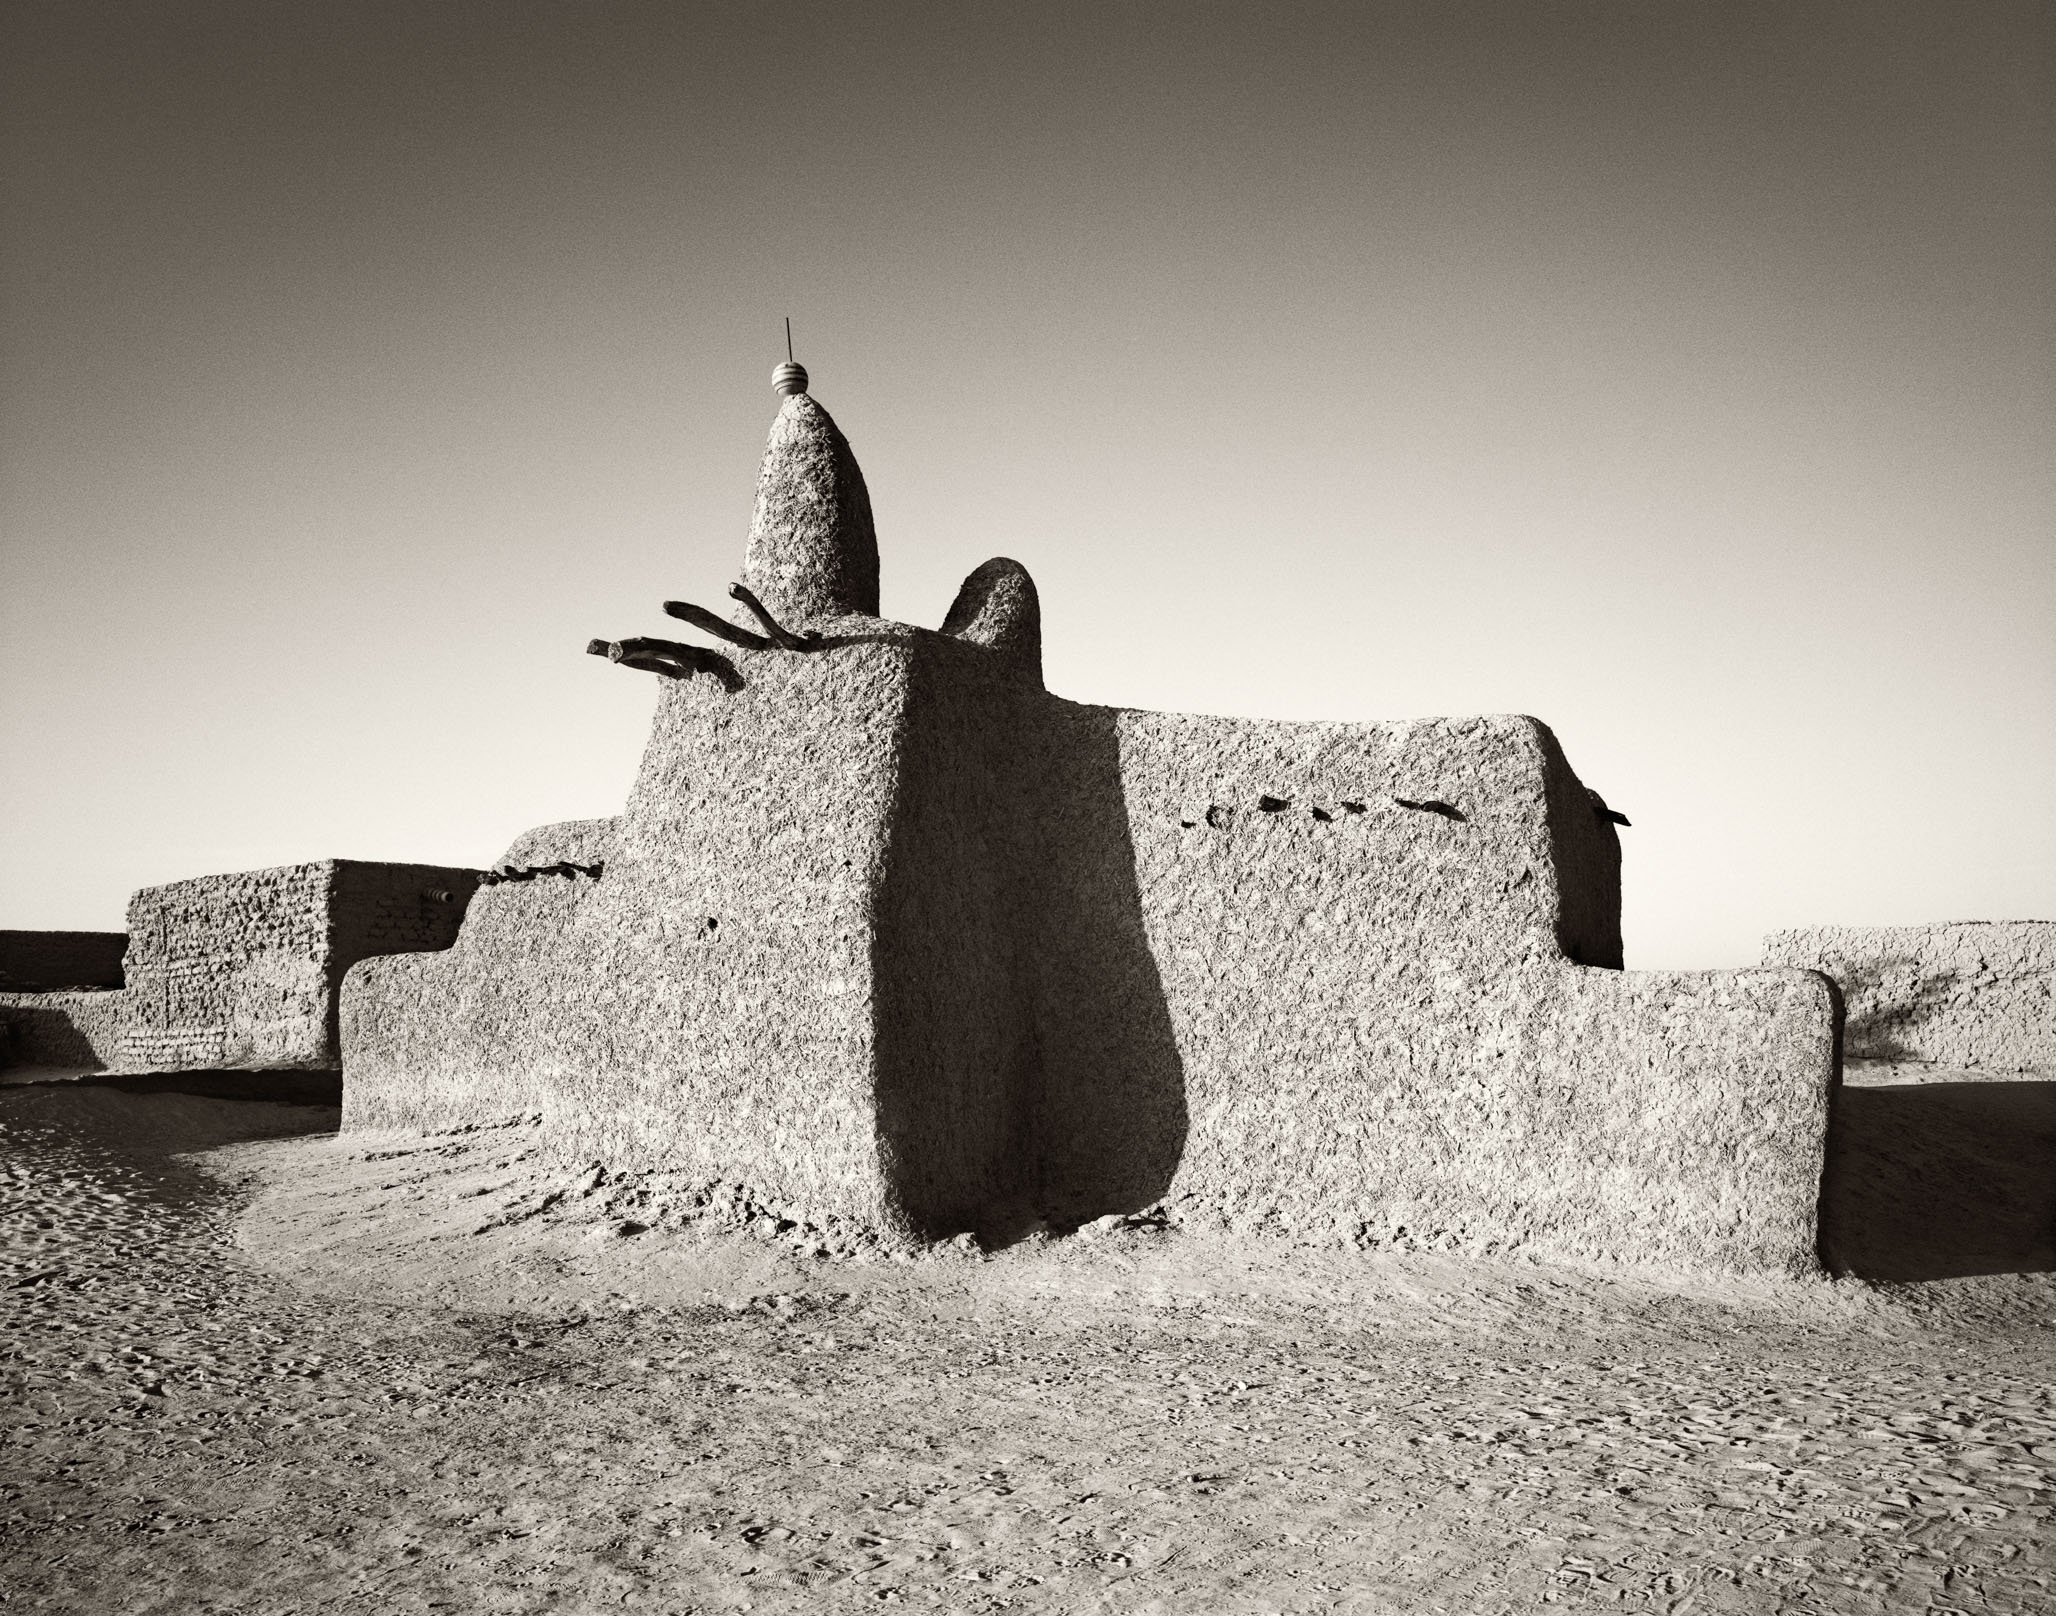 Adobe Mosques of Mali